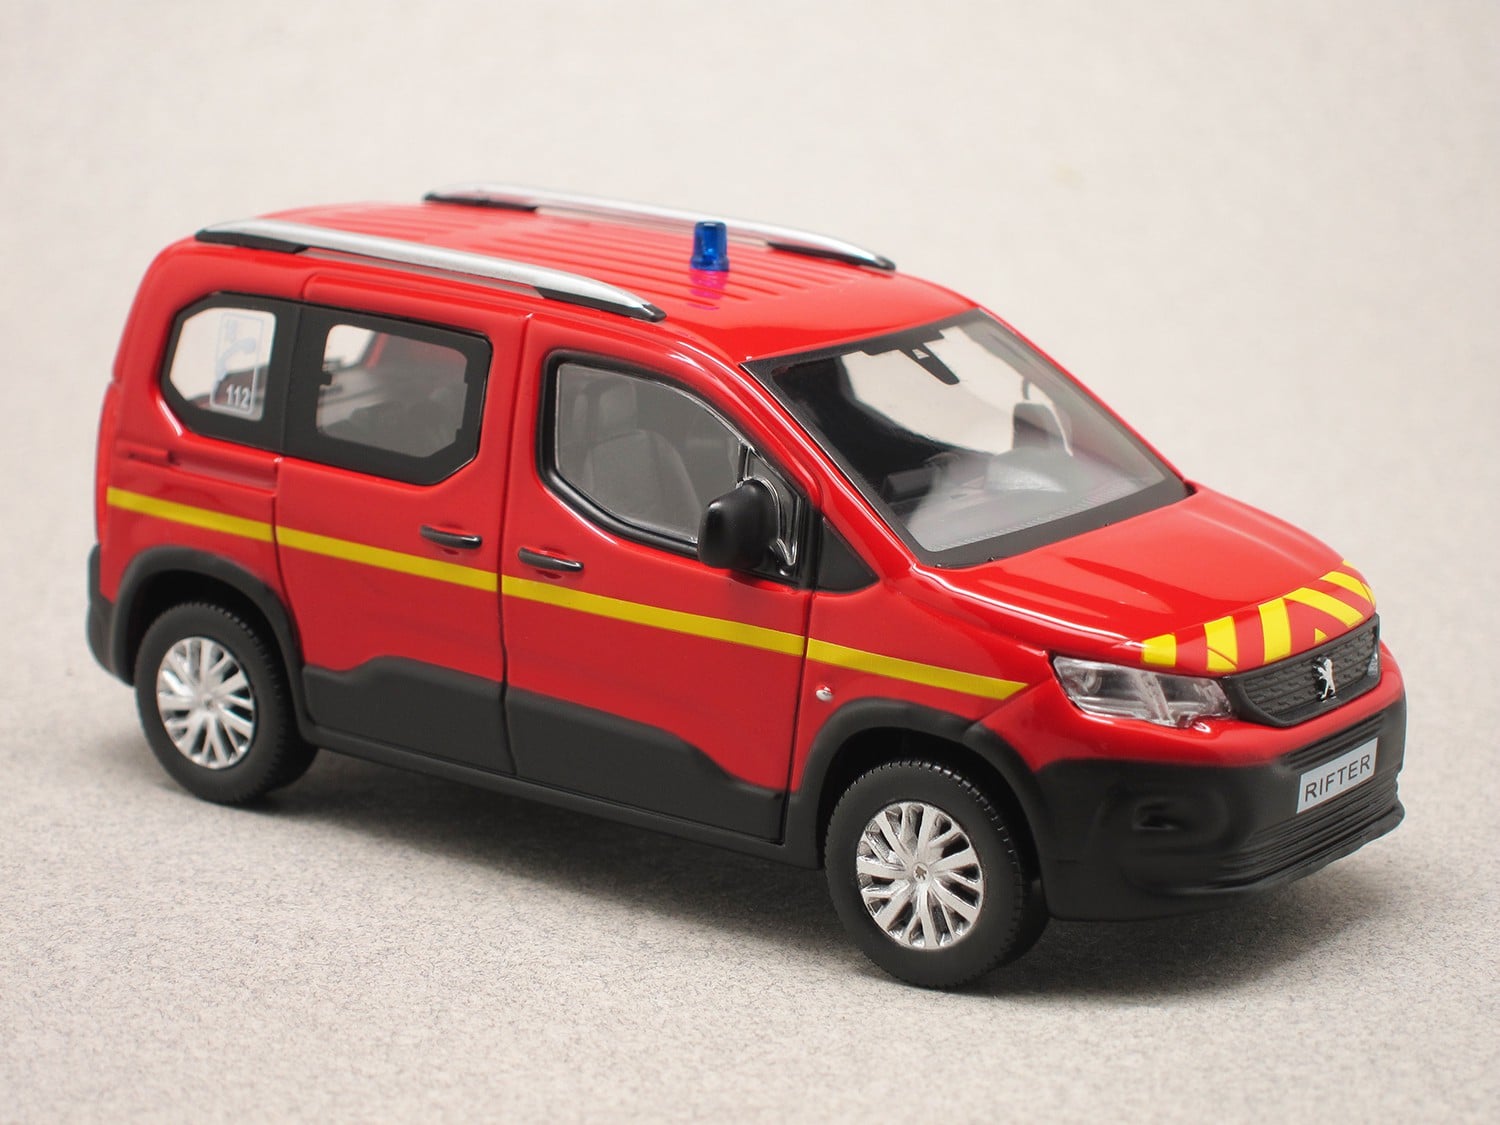 Peugeot Rifter Fire rescue (Norev) 1:43